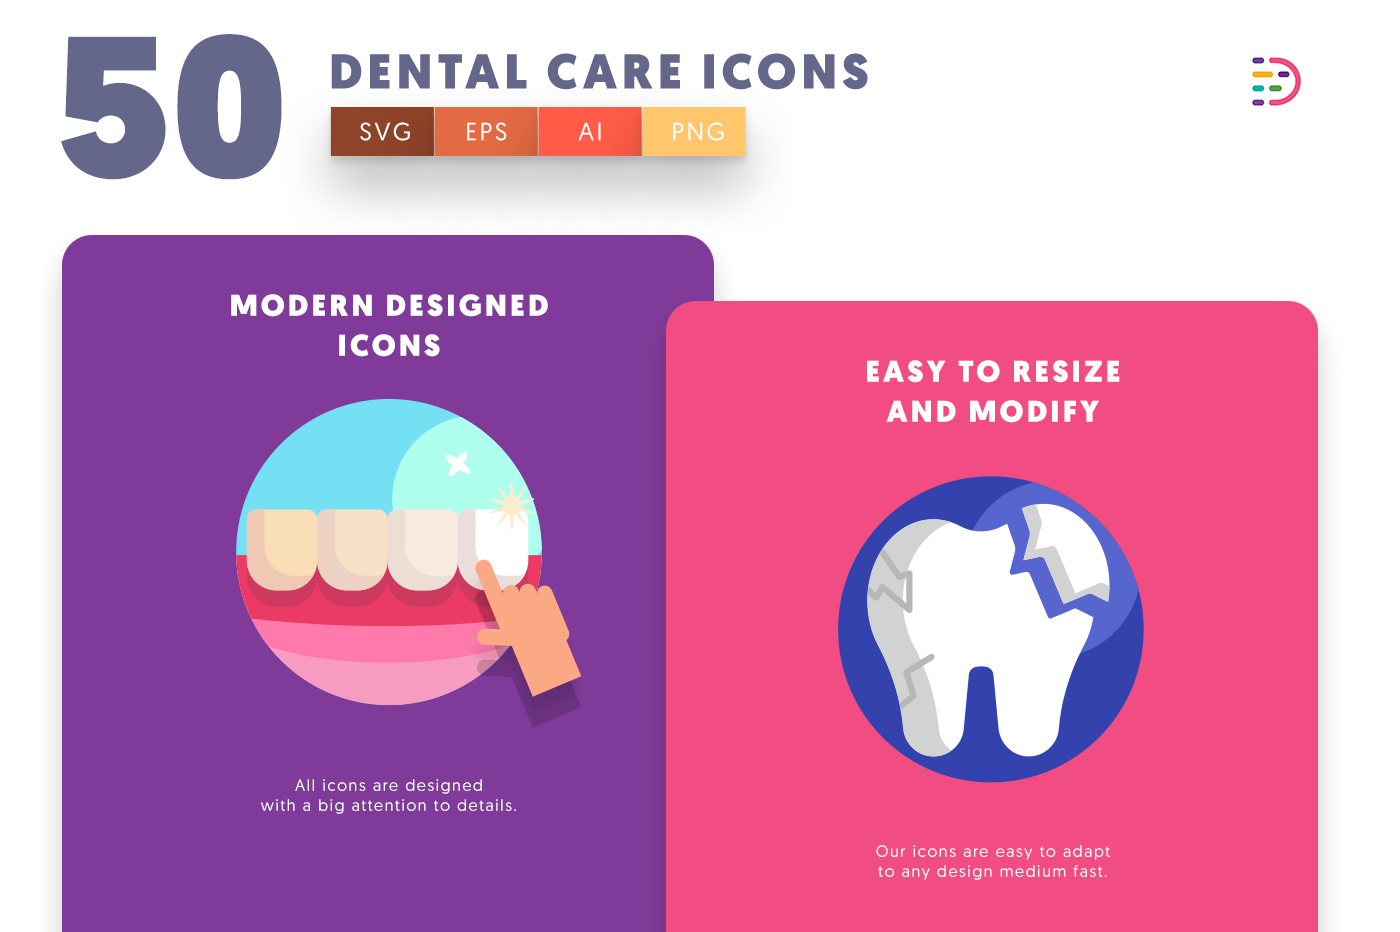 Dental Care icons png/svg/eps